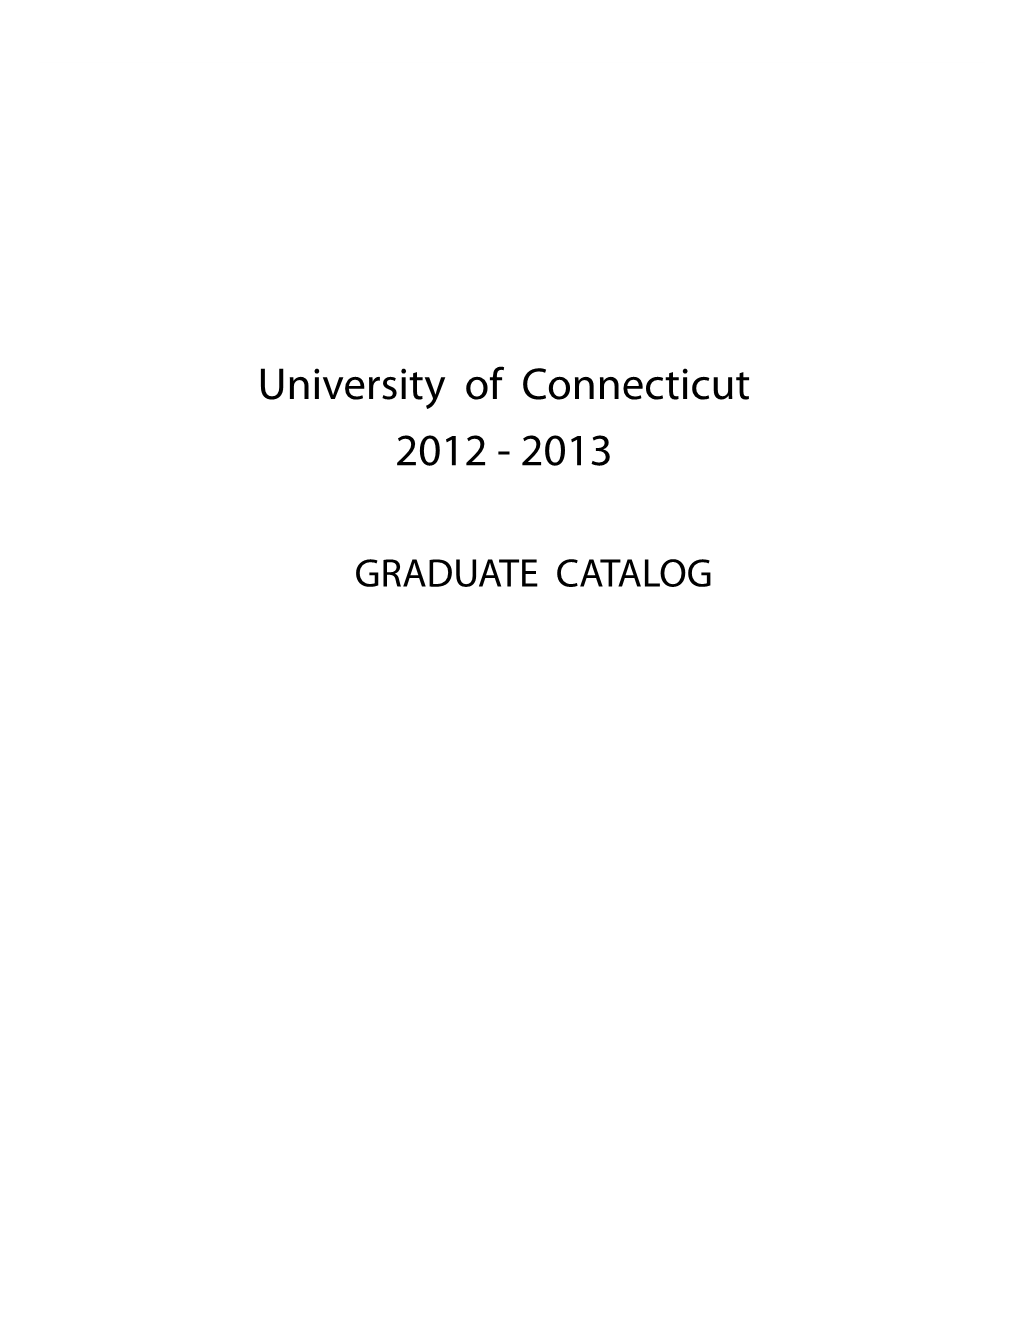 University of Connecticut 2012 - 2013